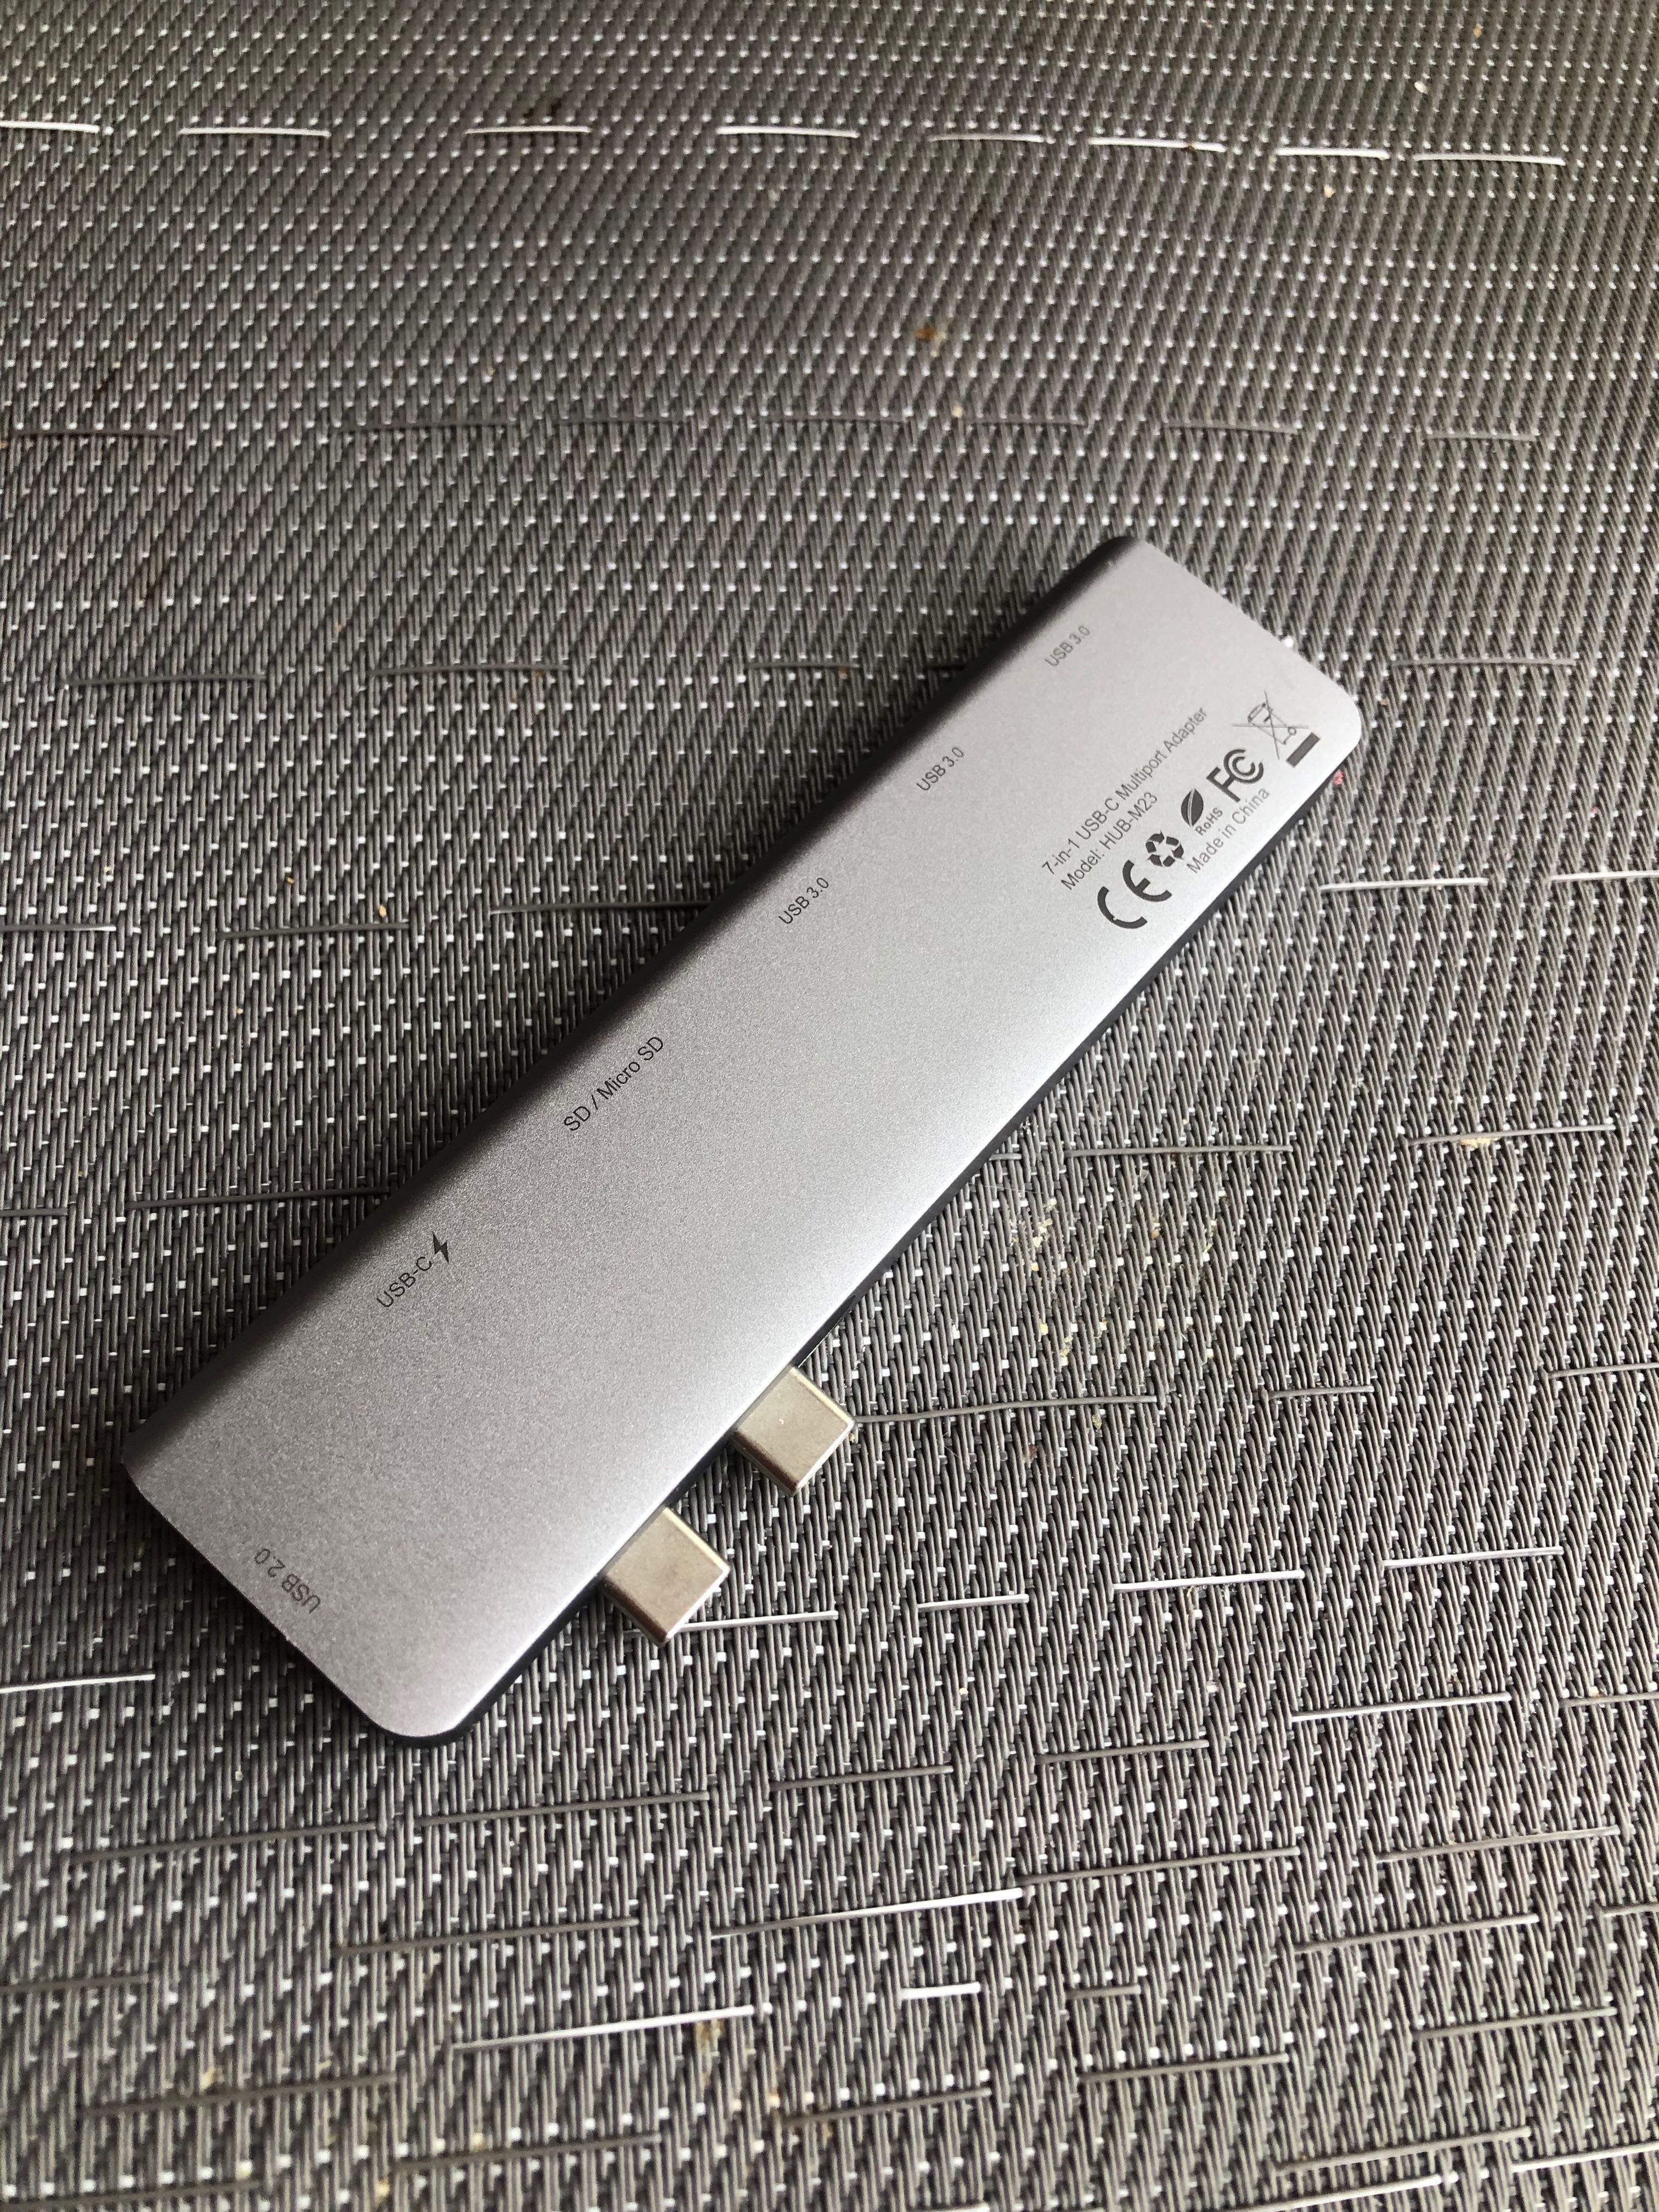 USB-хаб Choetech 7-in-1 (HUB-M23) юсб-хаб